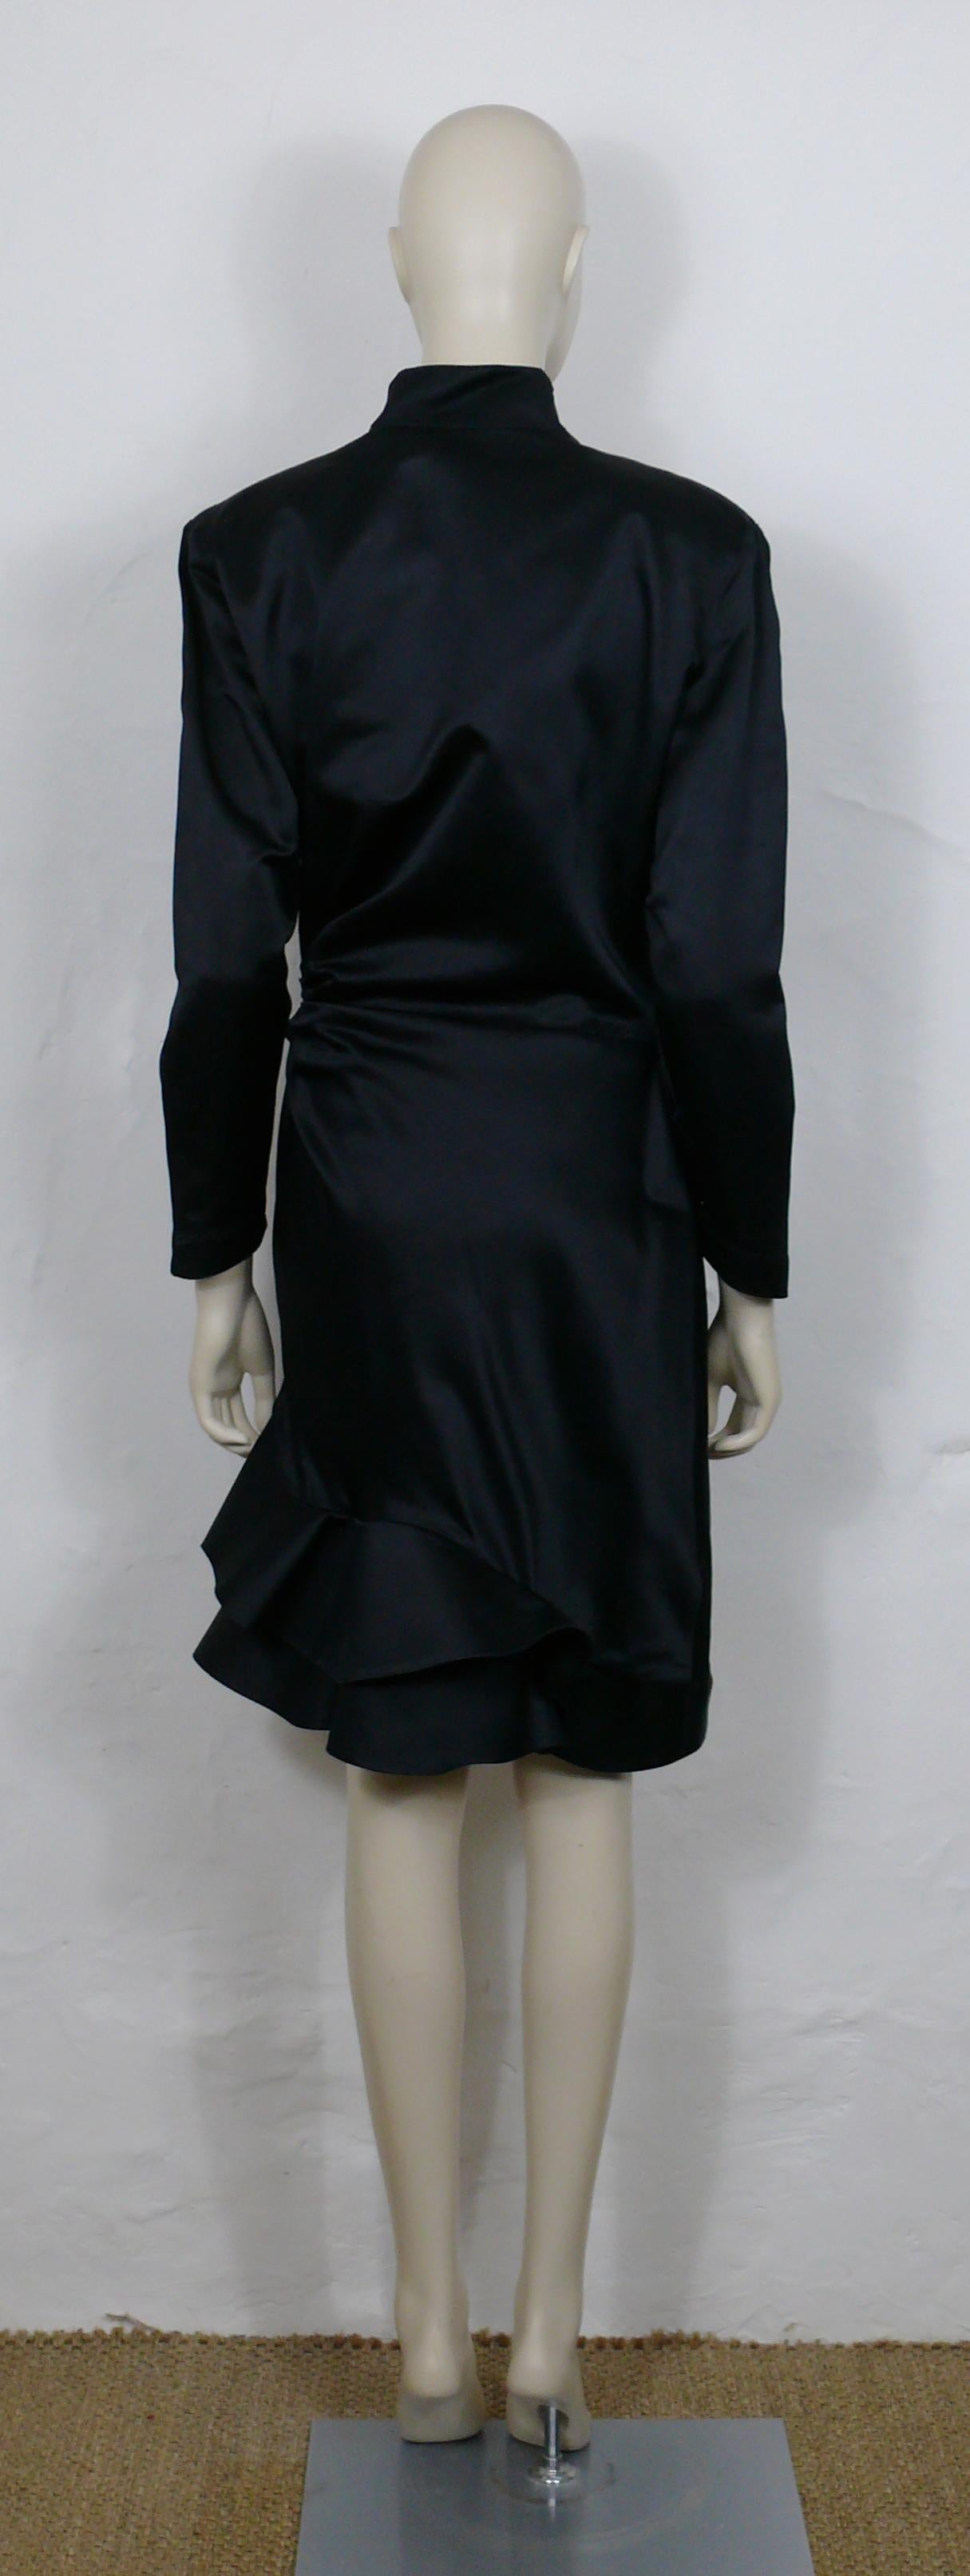 Thierry Mugler Vintage Black Asymetric Bias Cut Ruffled Cocktail Dress For Sale 1